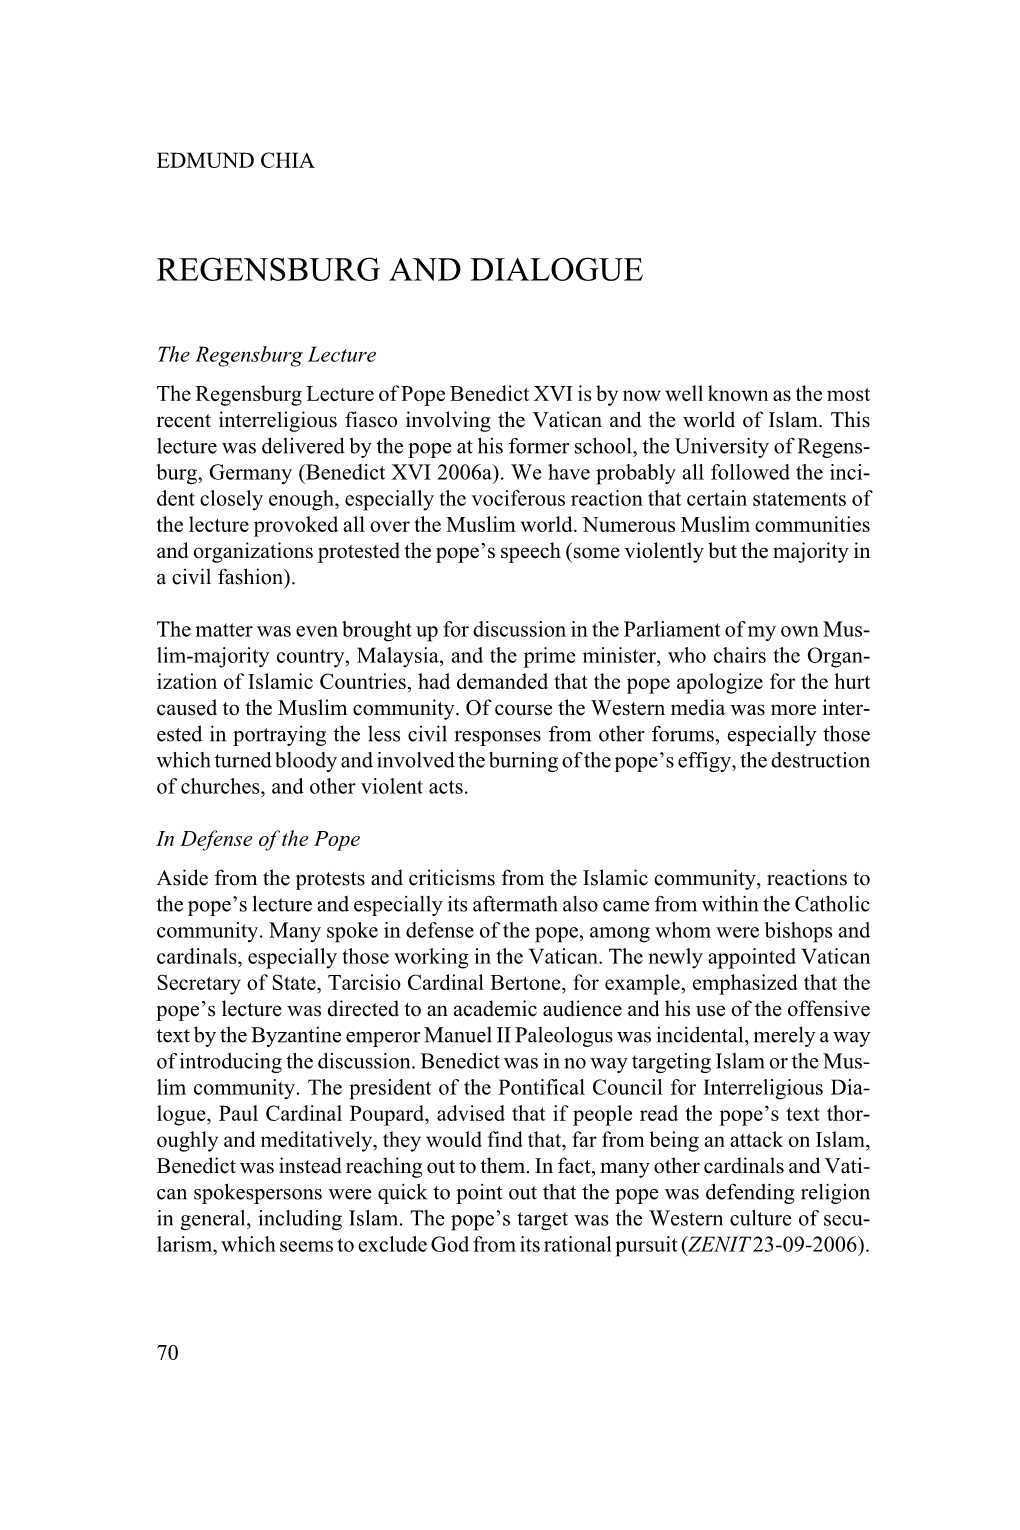 Regensburg and Dialogue